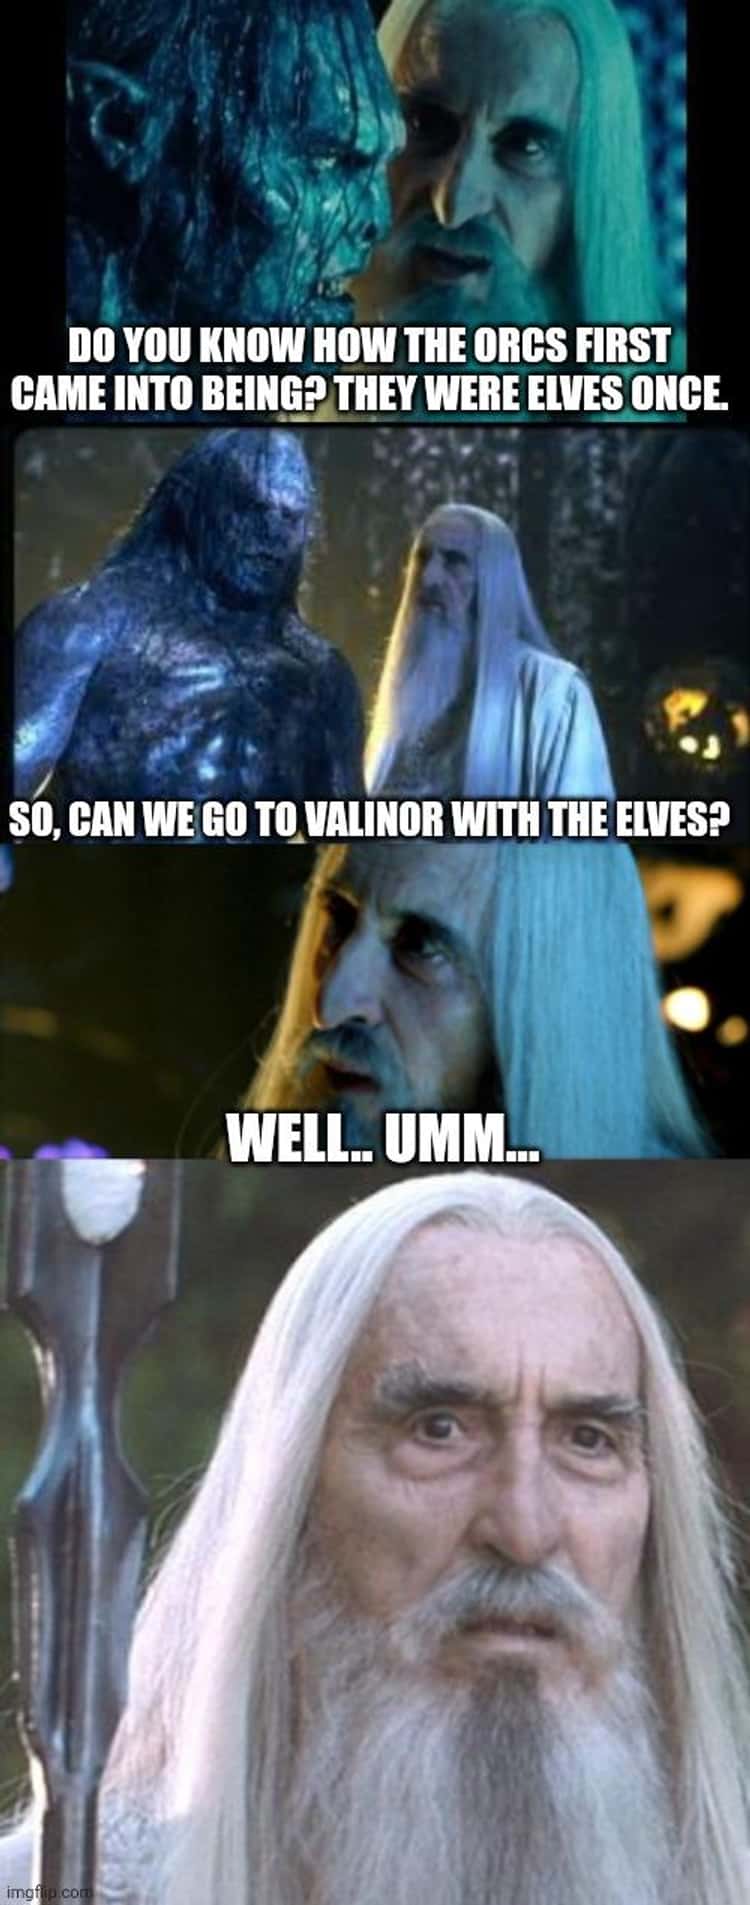 Bilbo scary face Memes - Imgflip